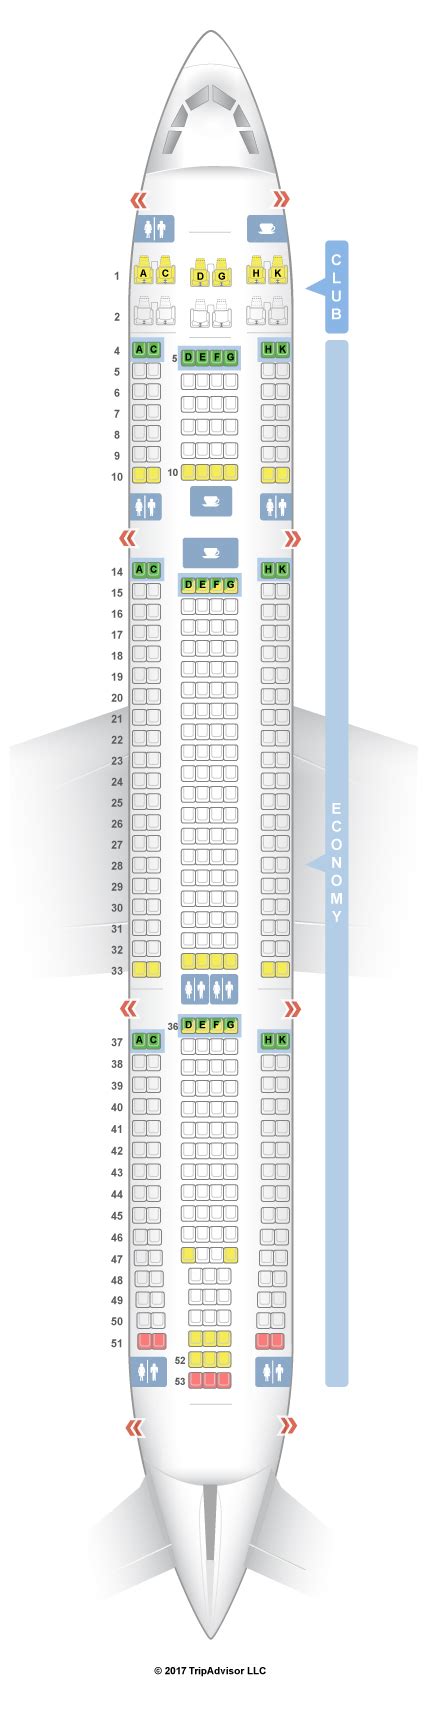 Seatguru Seat Map Air Transat Airbus A330 300 333 Layout 2